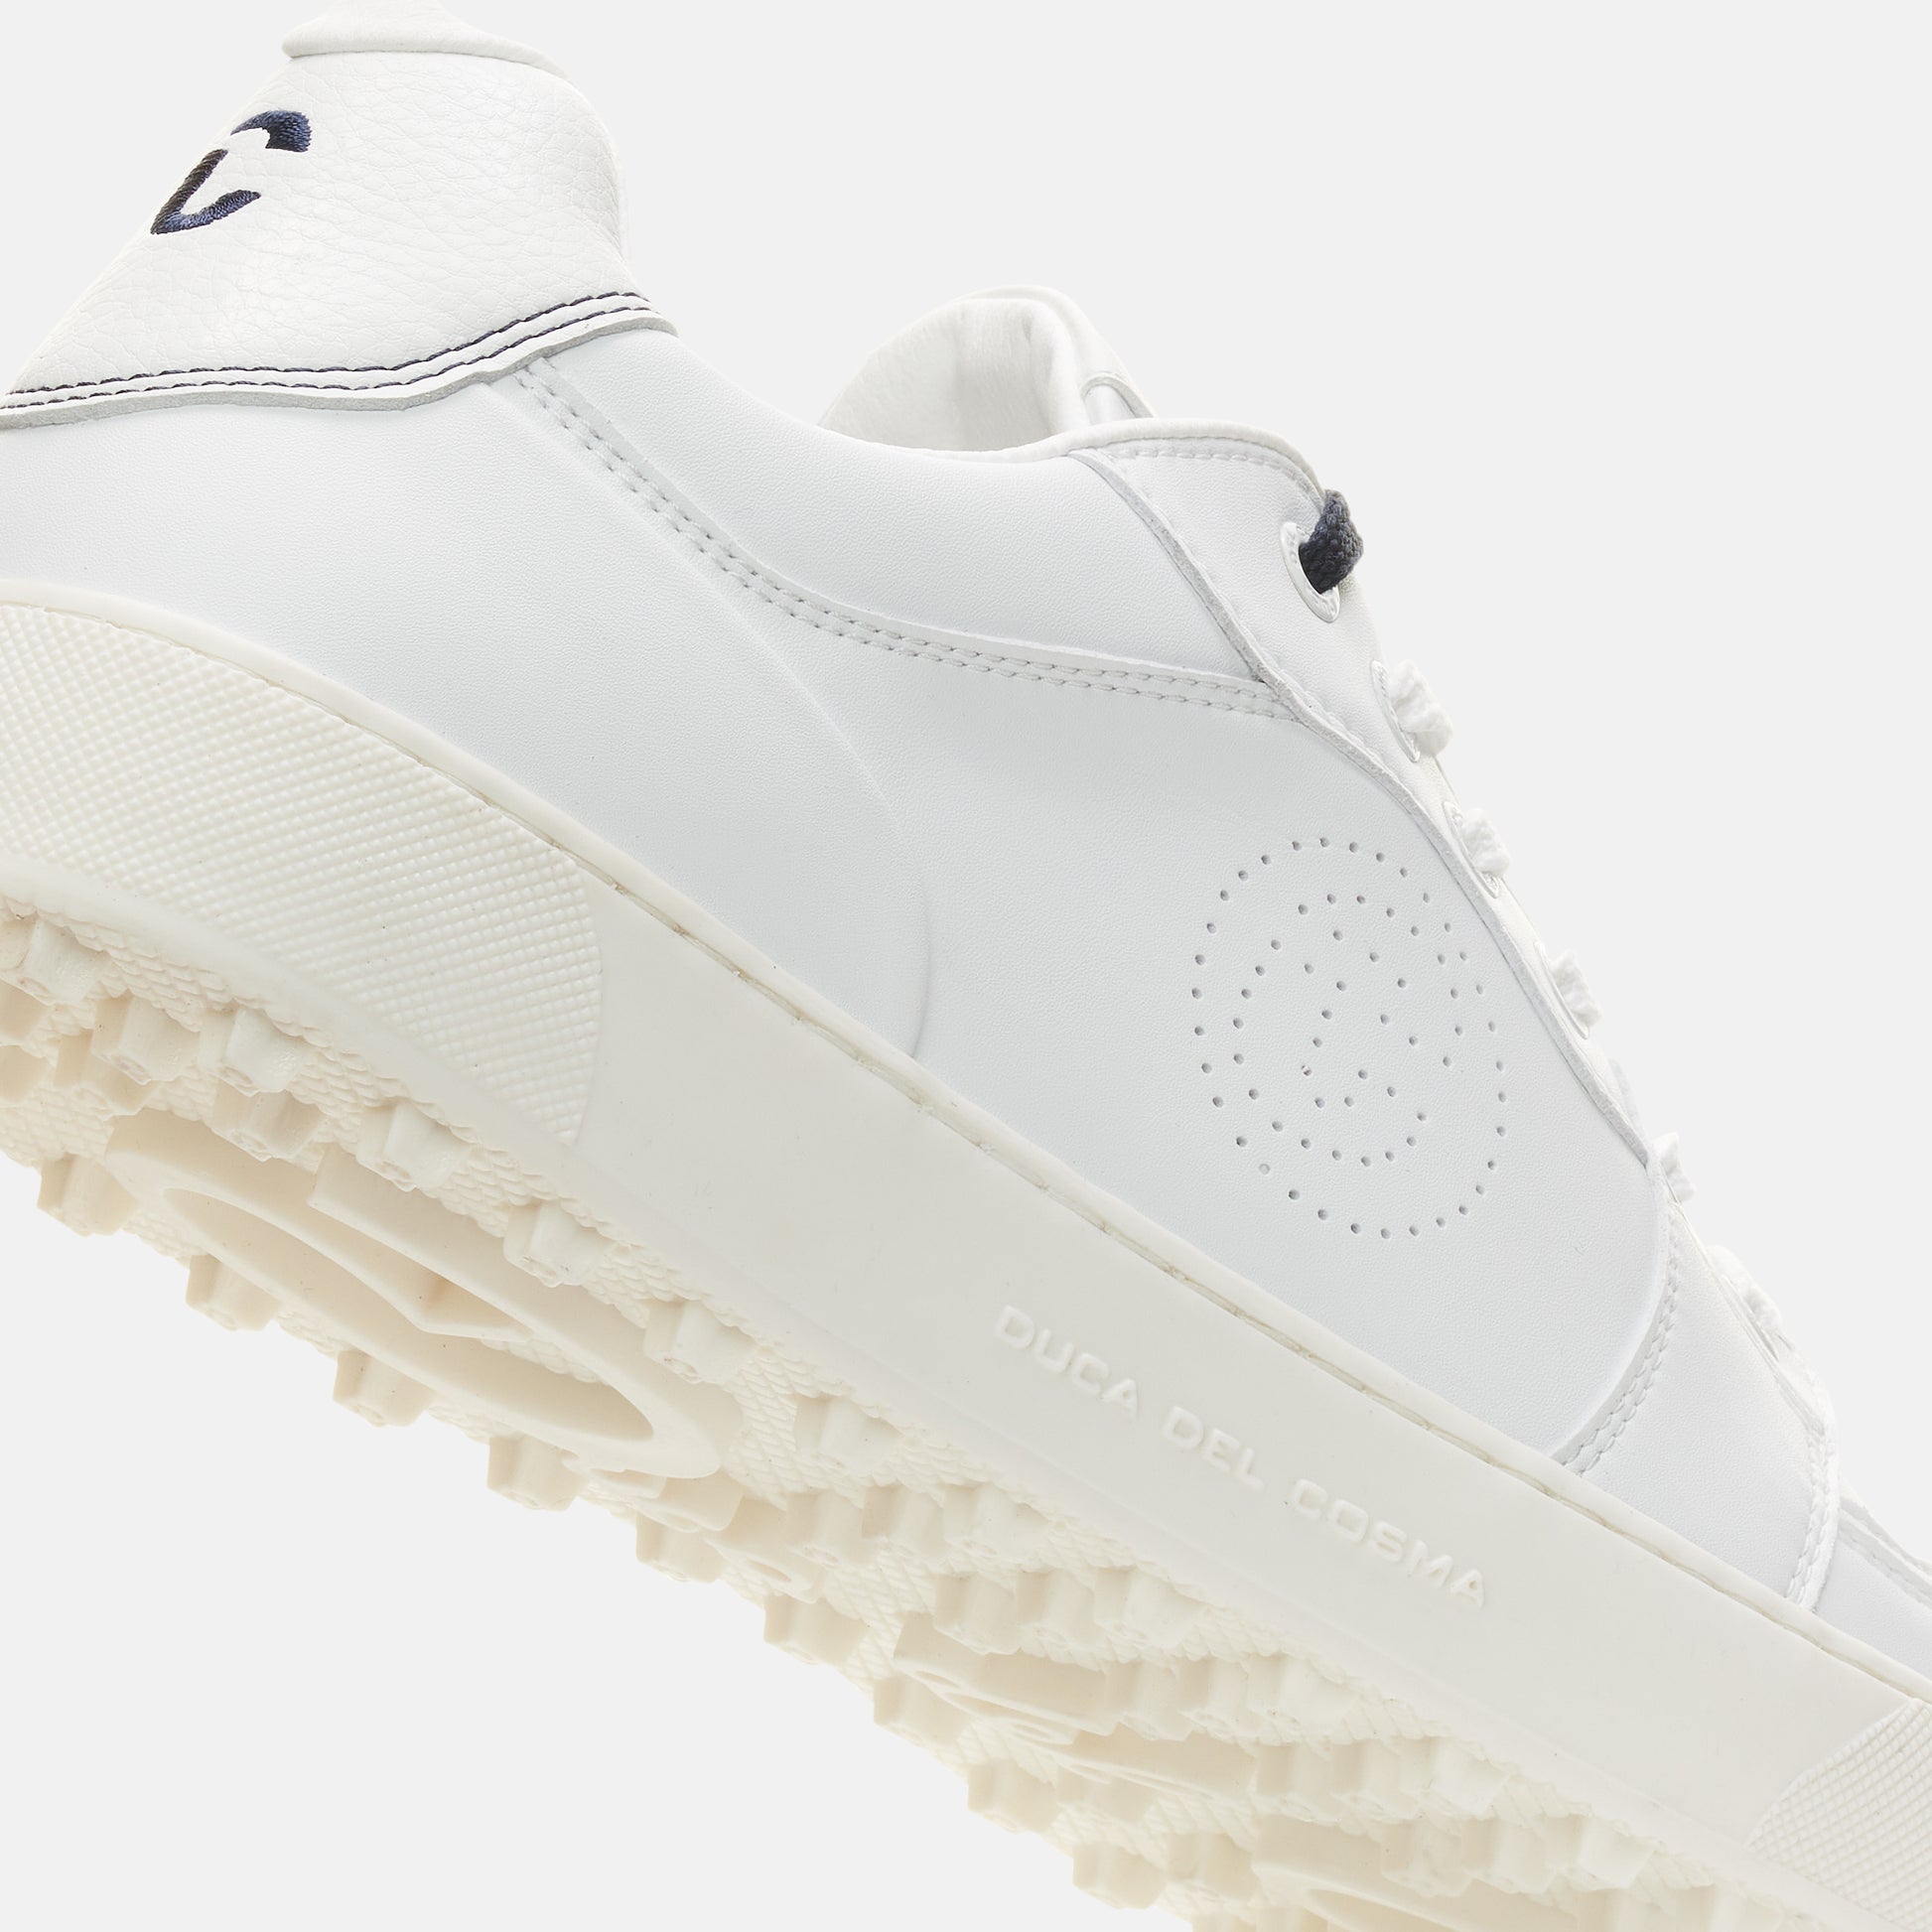 white men's golf shoes